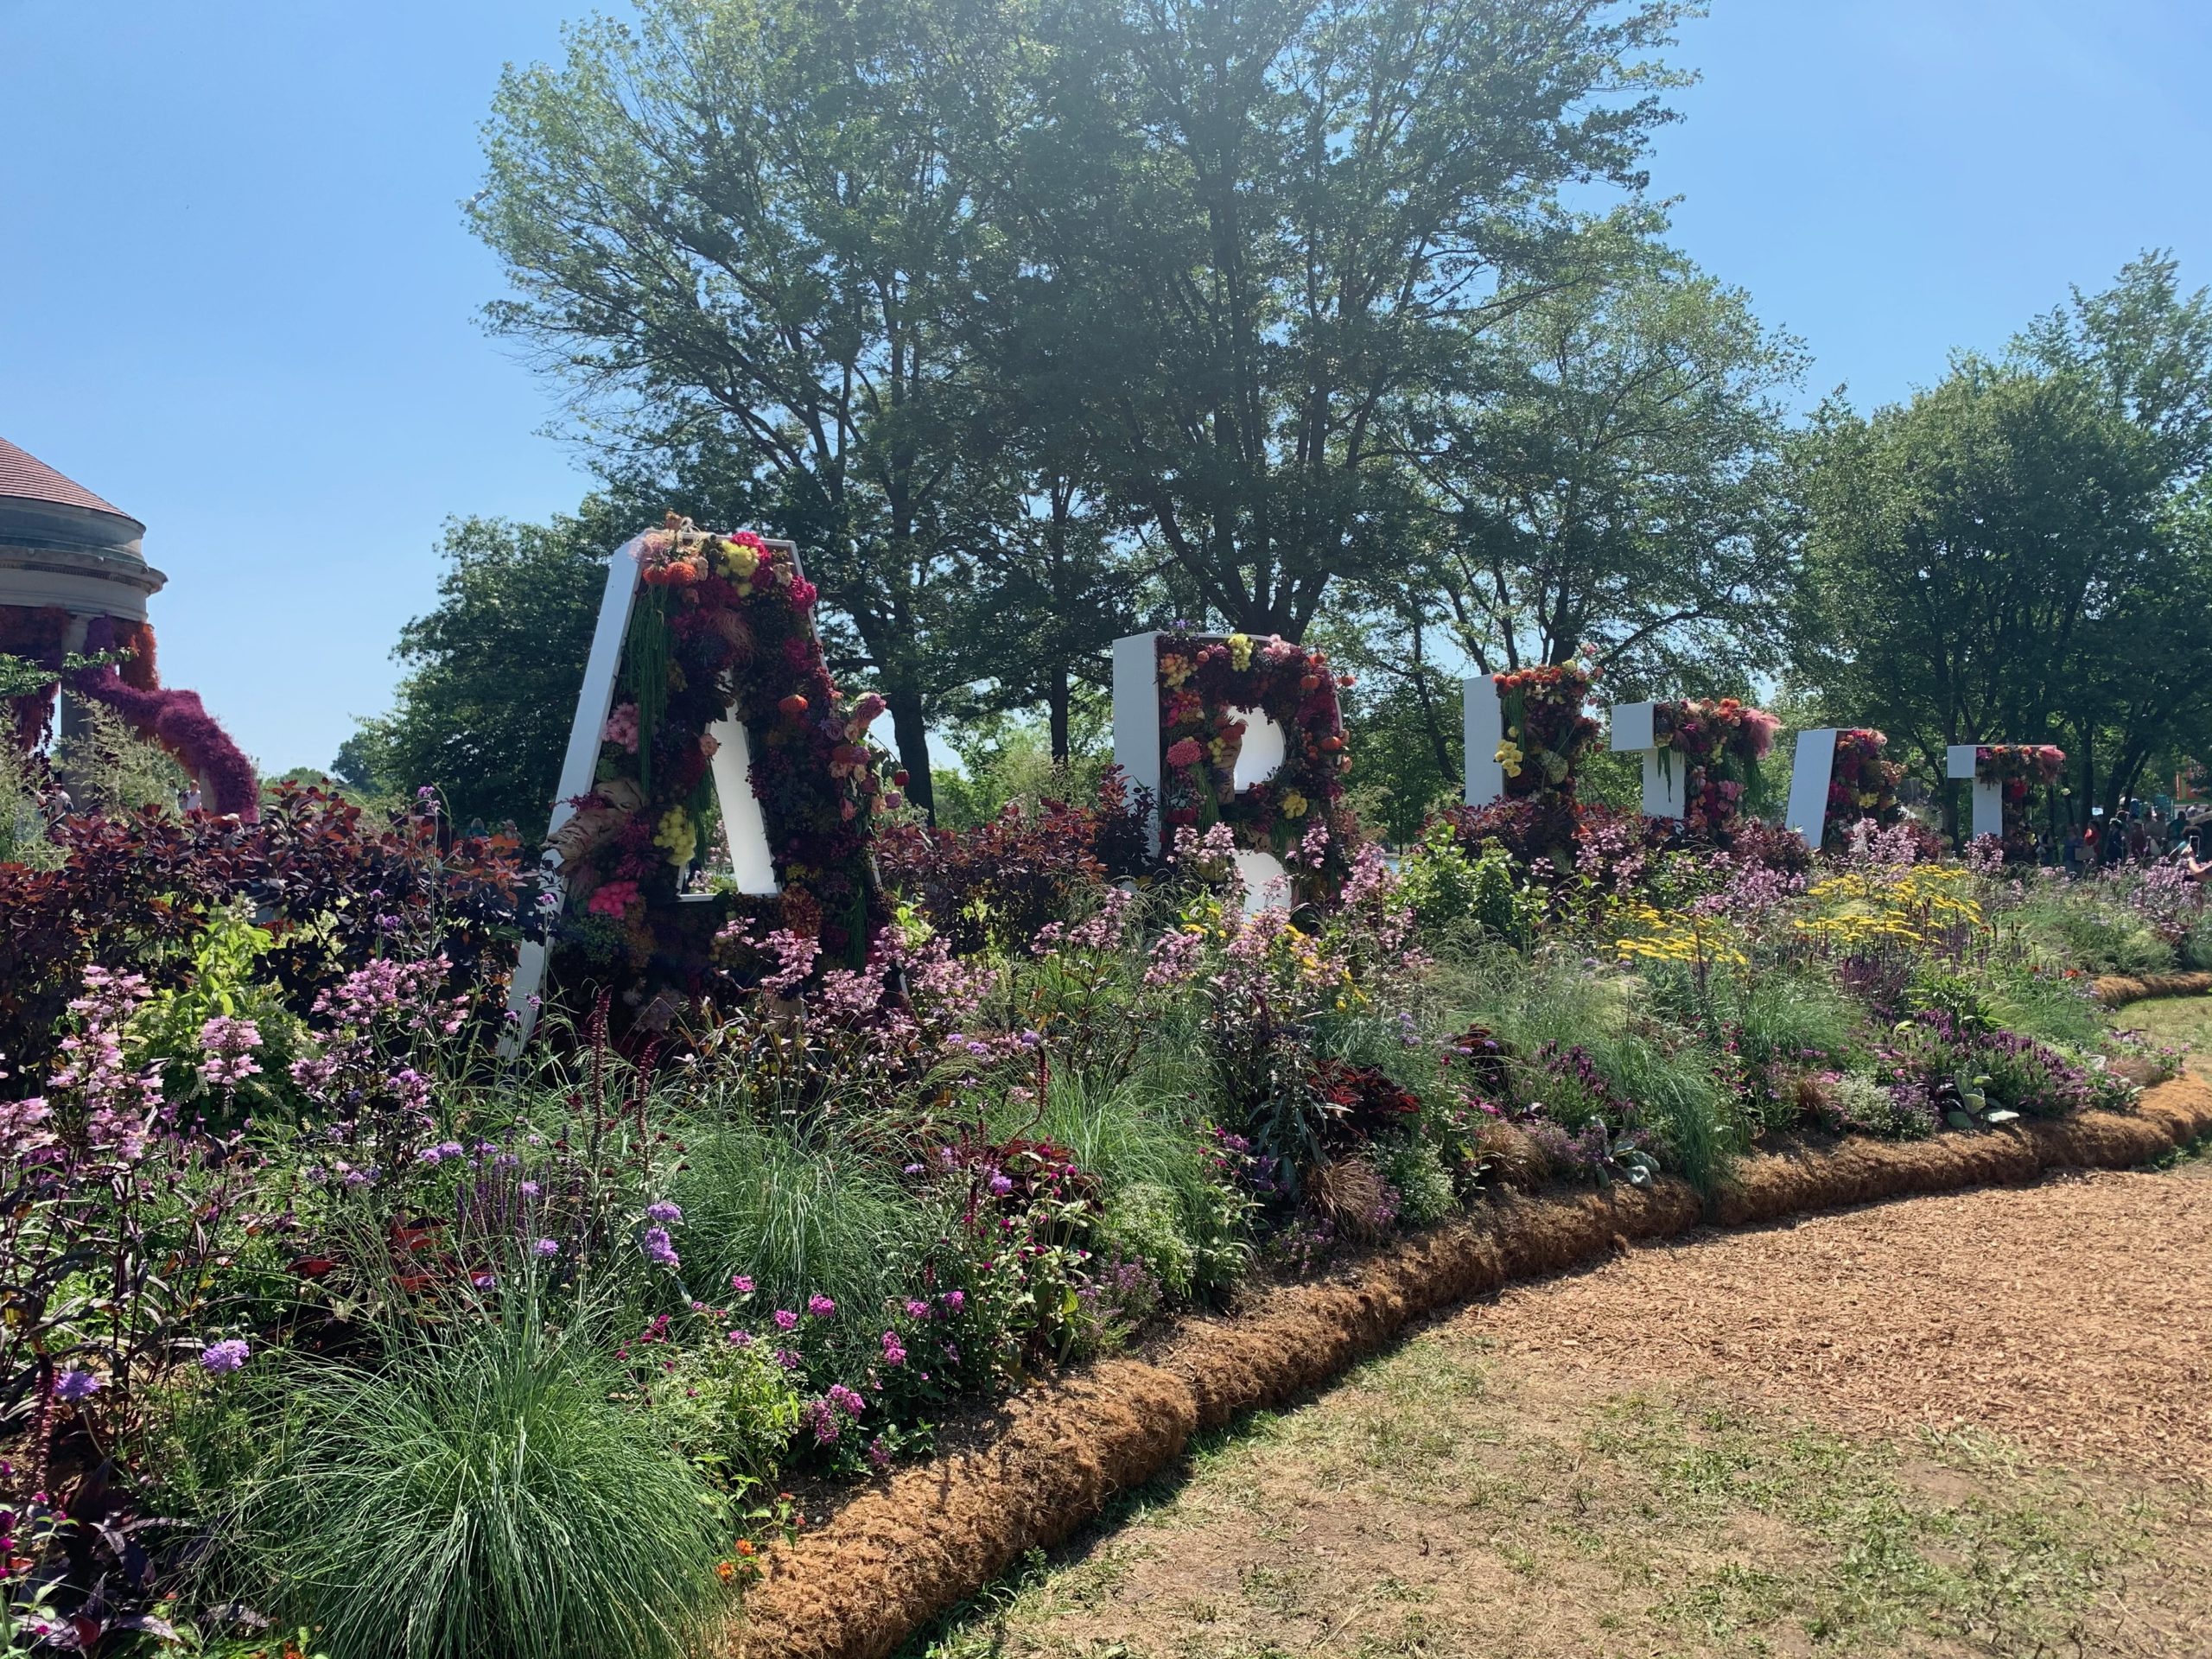 Habitat: Nature's Masterpiece, the 2021 Philadelphia Flower Show theme at FDR Park